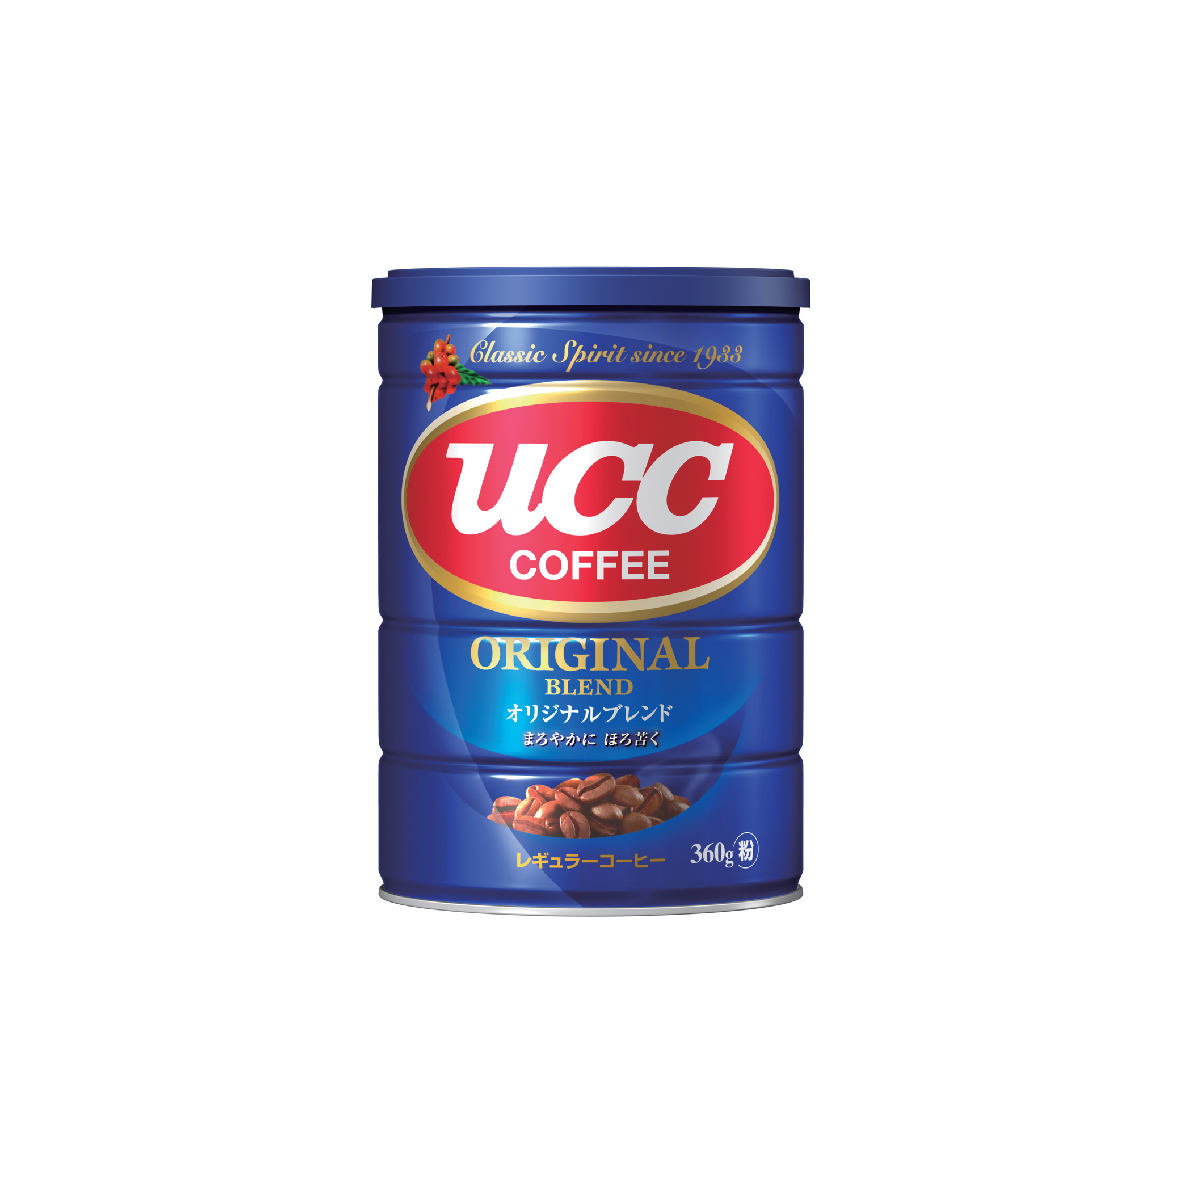 UCC Coffee Original Blend Roasted Coffee